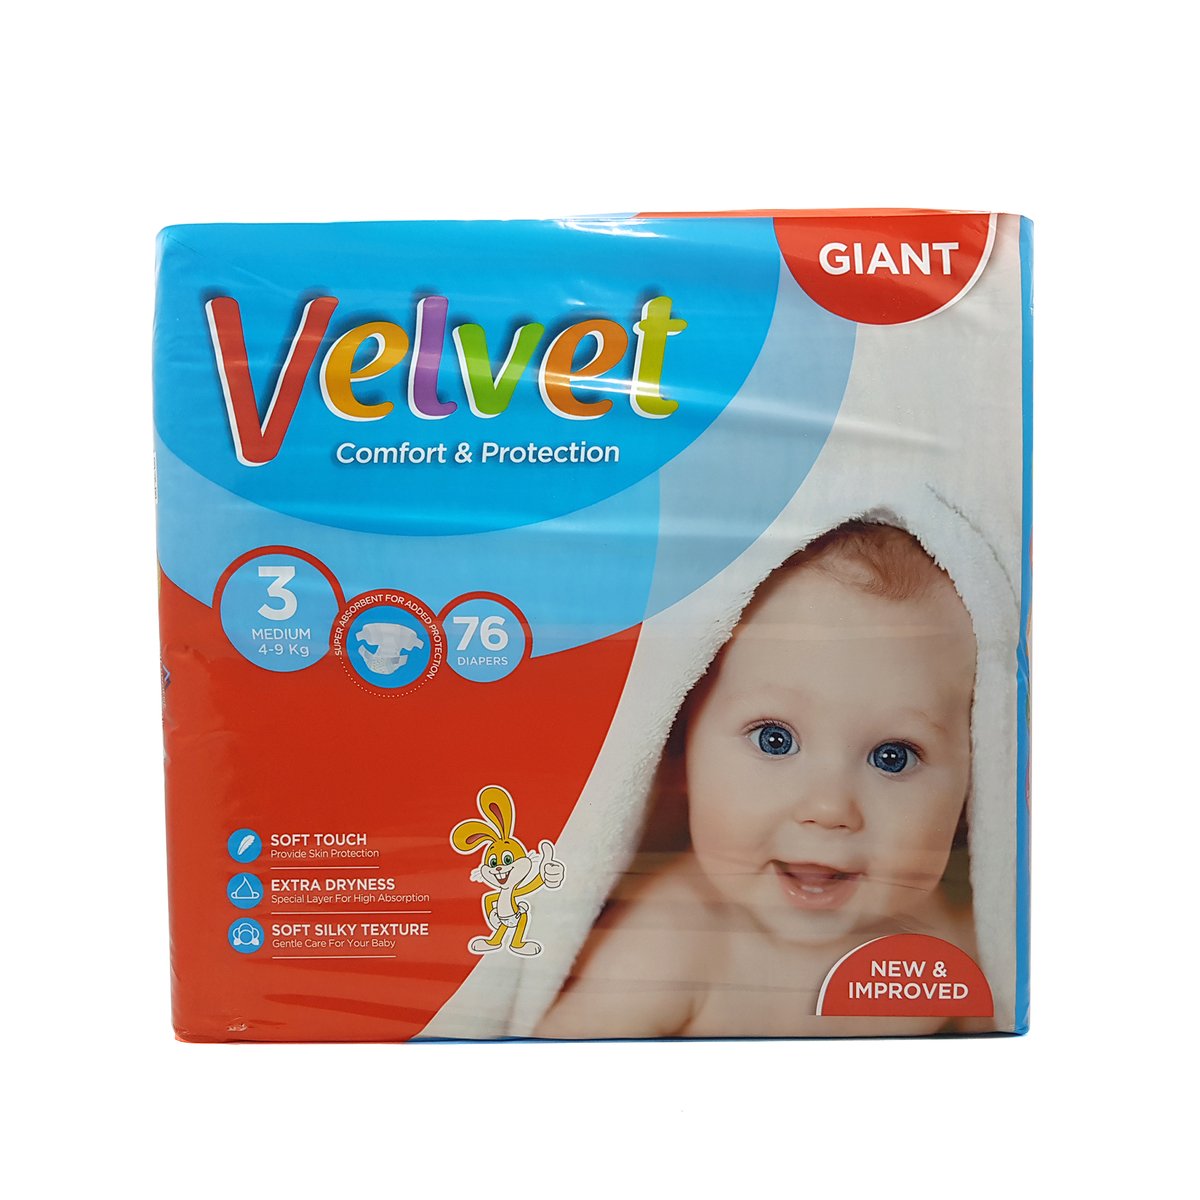 Velvet Comfort & Protection Diaper No.3 Giant 4-9kg Medium 76pcs